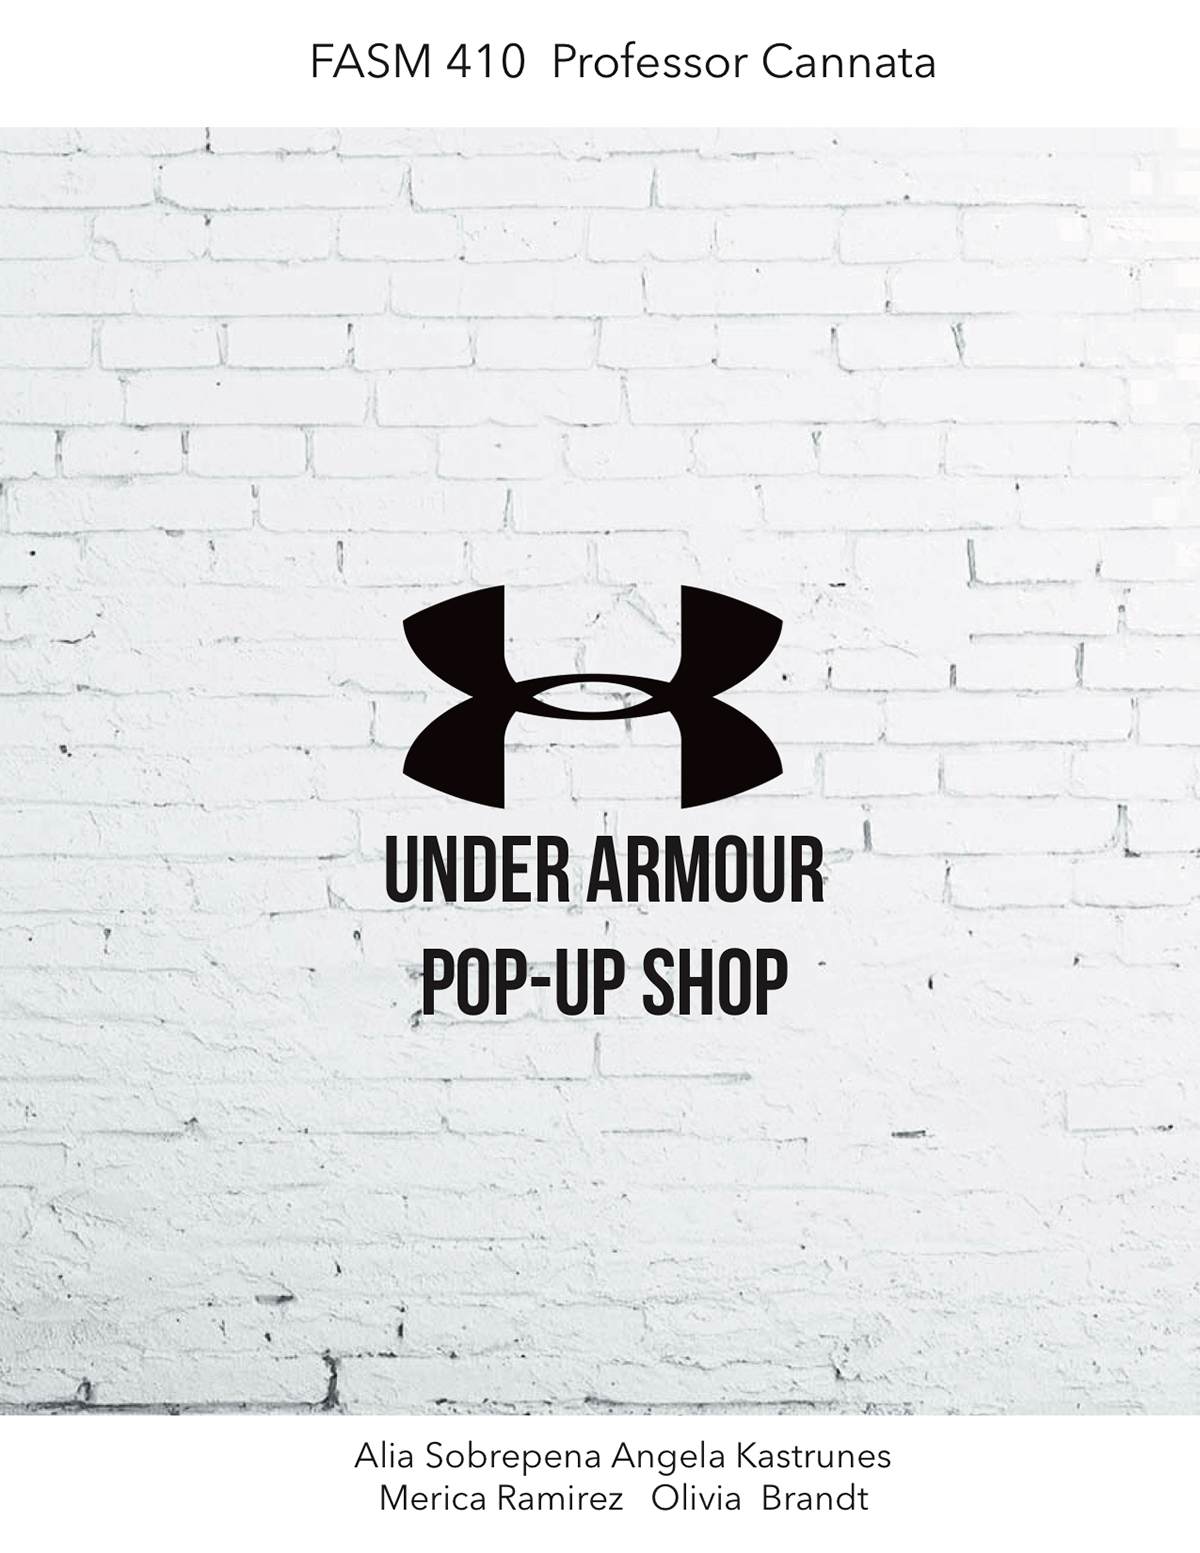 PopUp Shop Visual Merchandising Fashion Business Under Armour Sportswear product development fashion marketing retail management